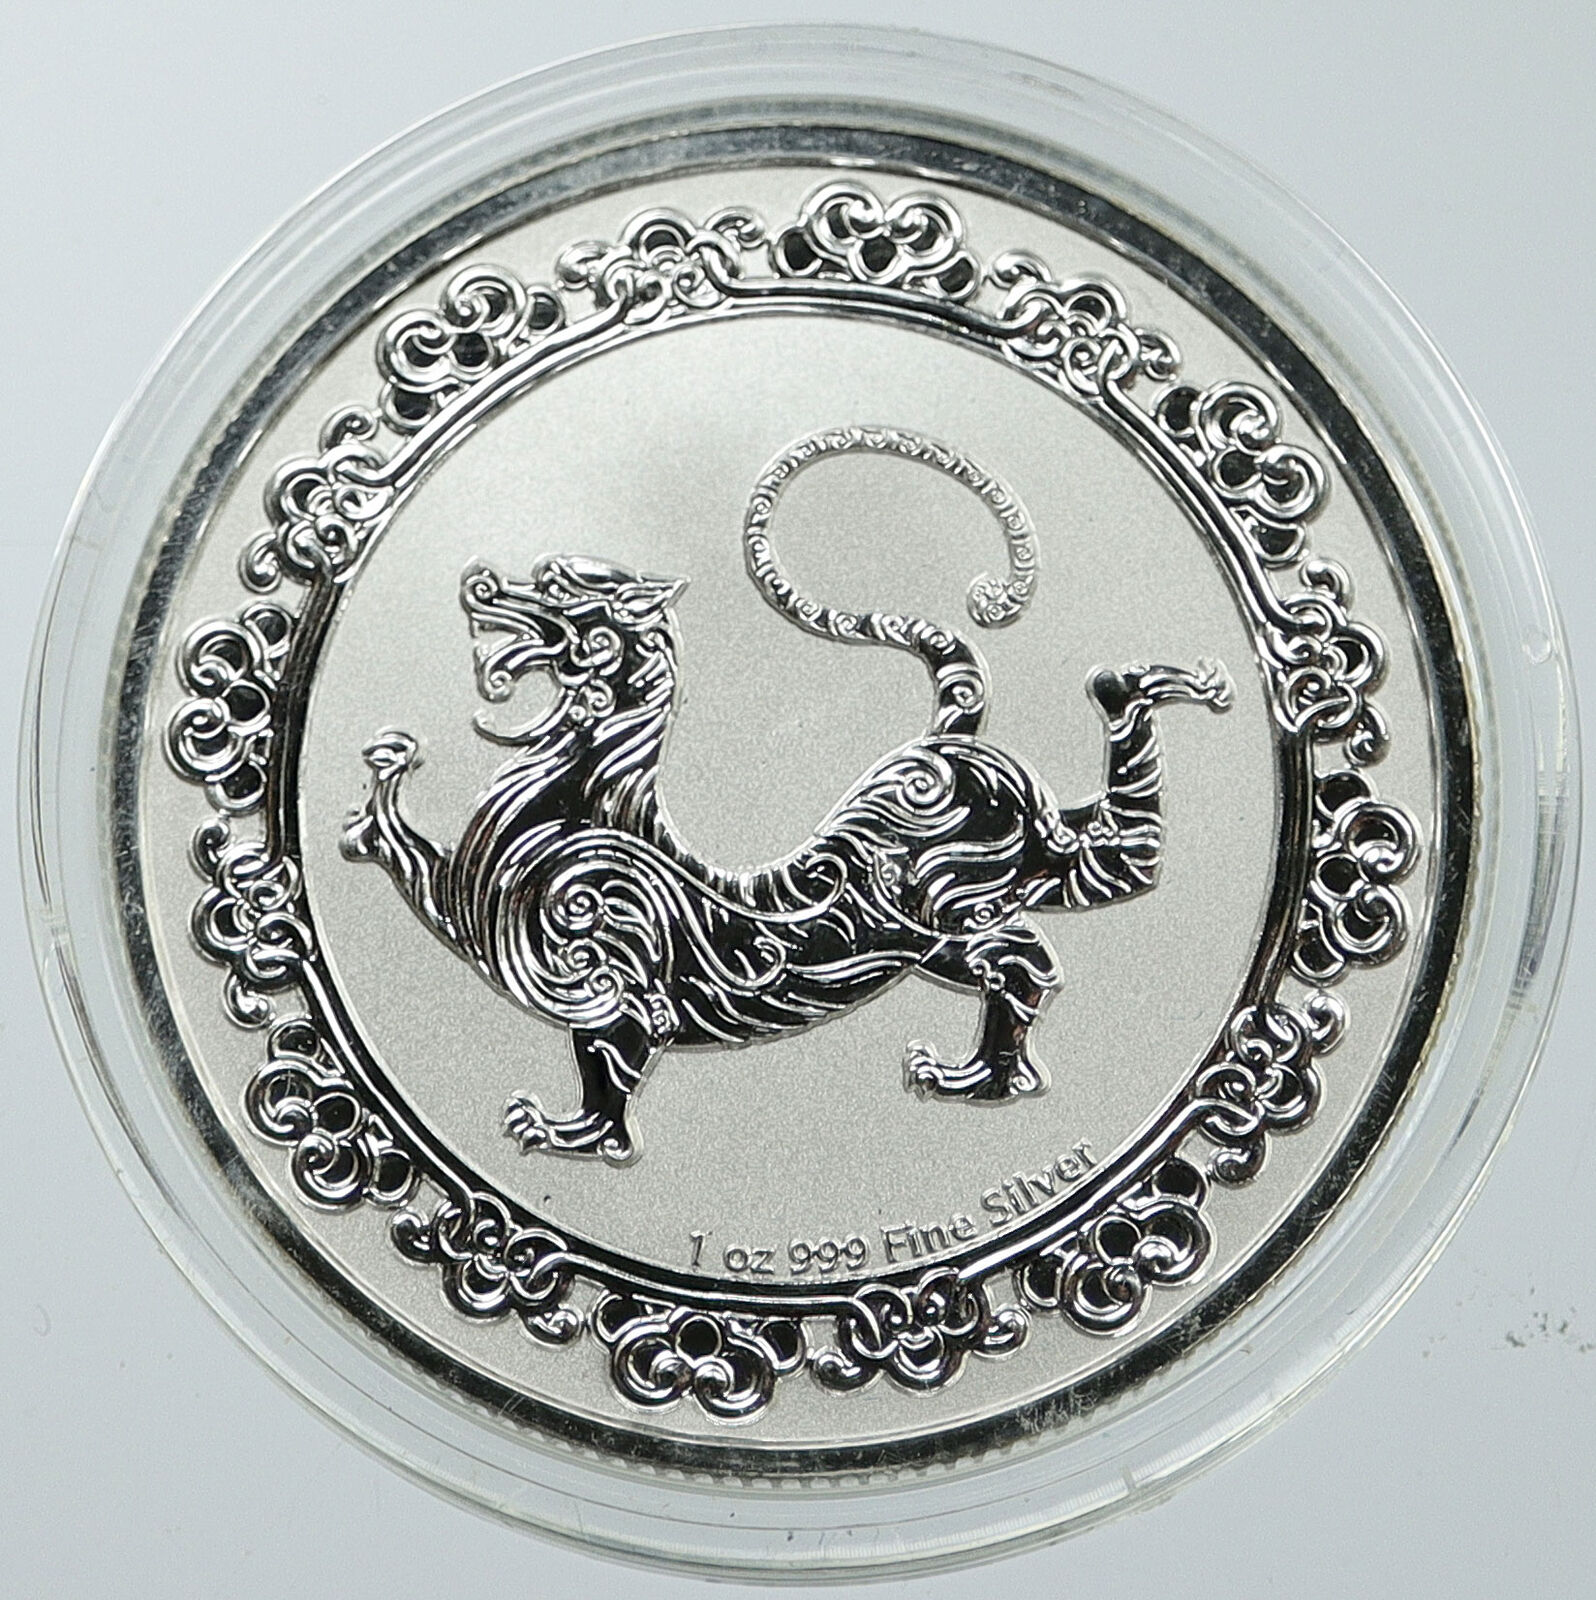 2019 NIUE UK Elizabeth II WHITE TIGER 1 OZ Proof Silver $2 Dollar Coin i116550